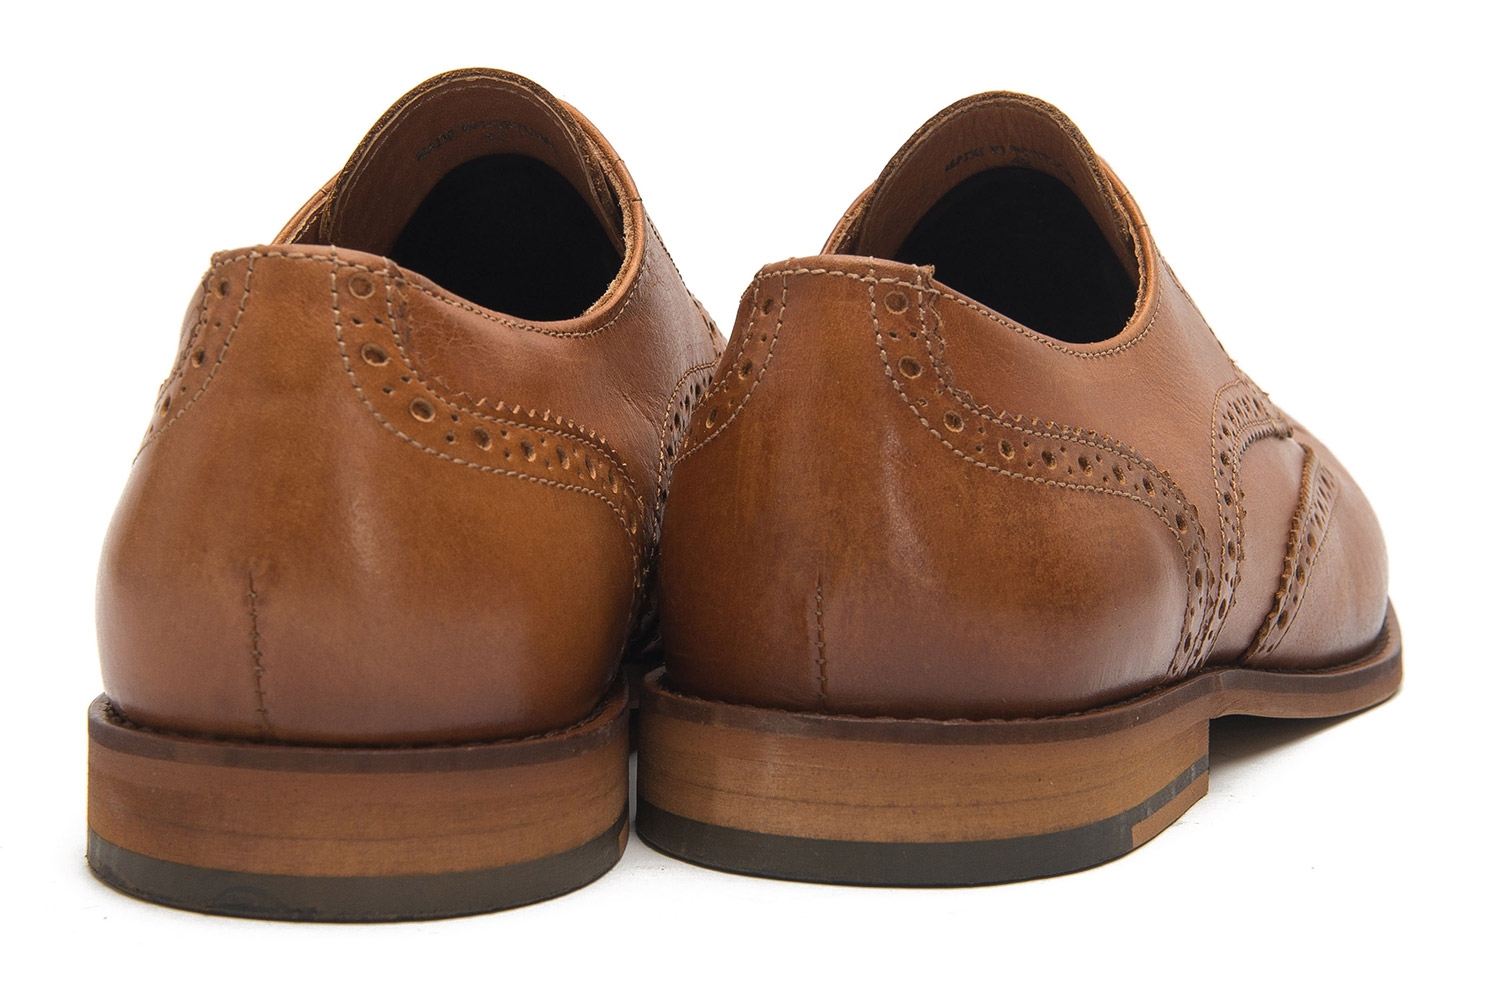 Pantofi Bigotti maro piele naturala 2